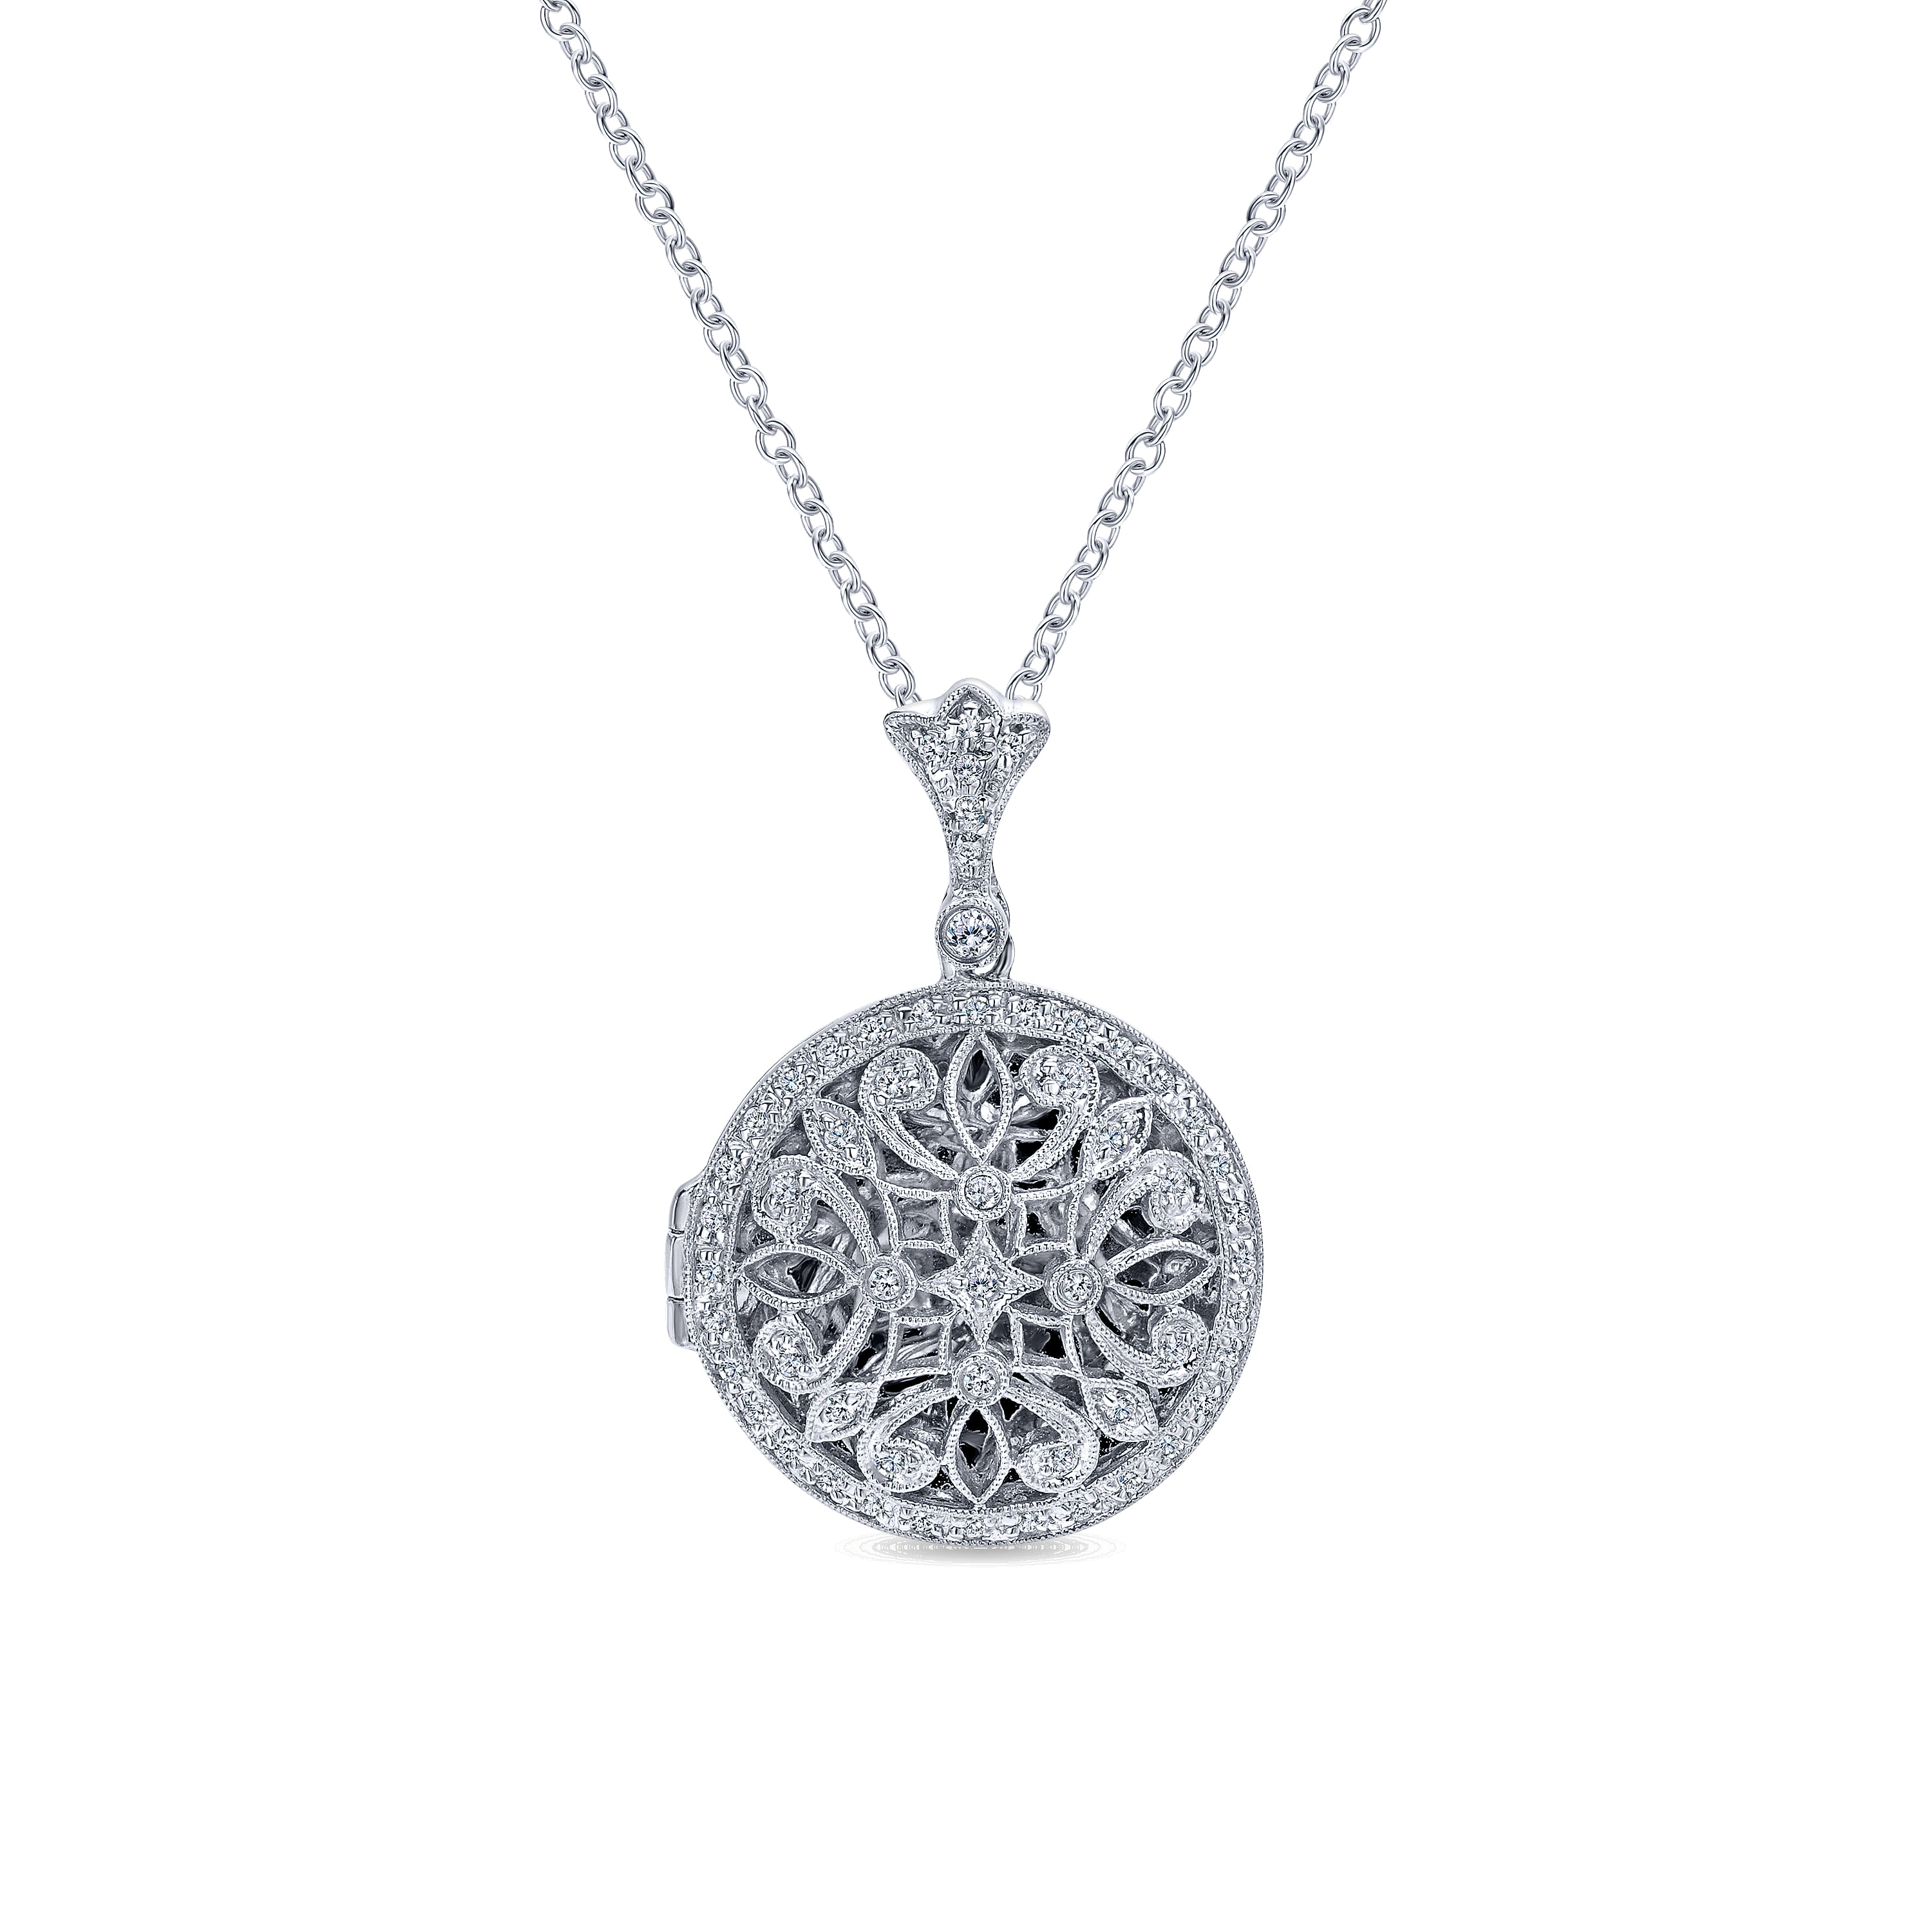 24 inch Vintage Inspired 14K White Gold Filigree Diamond Locket Necklace